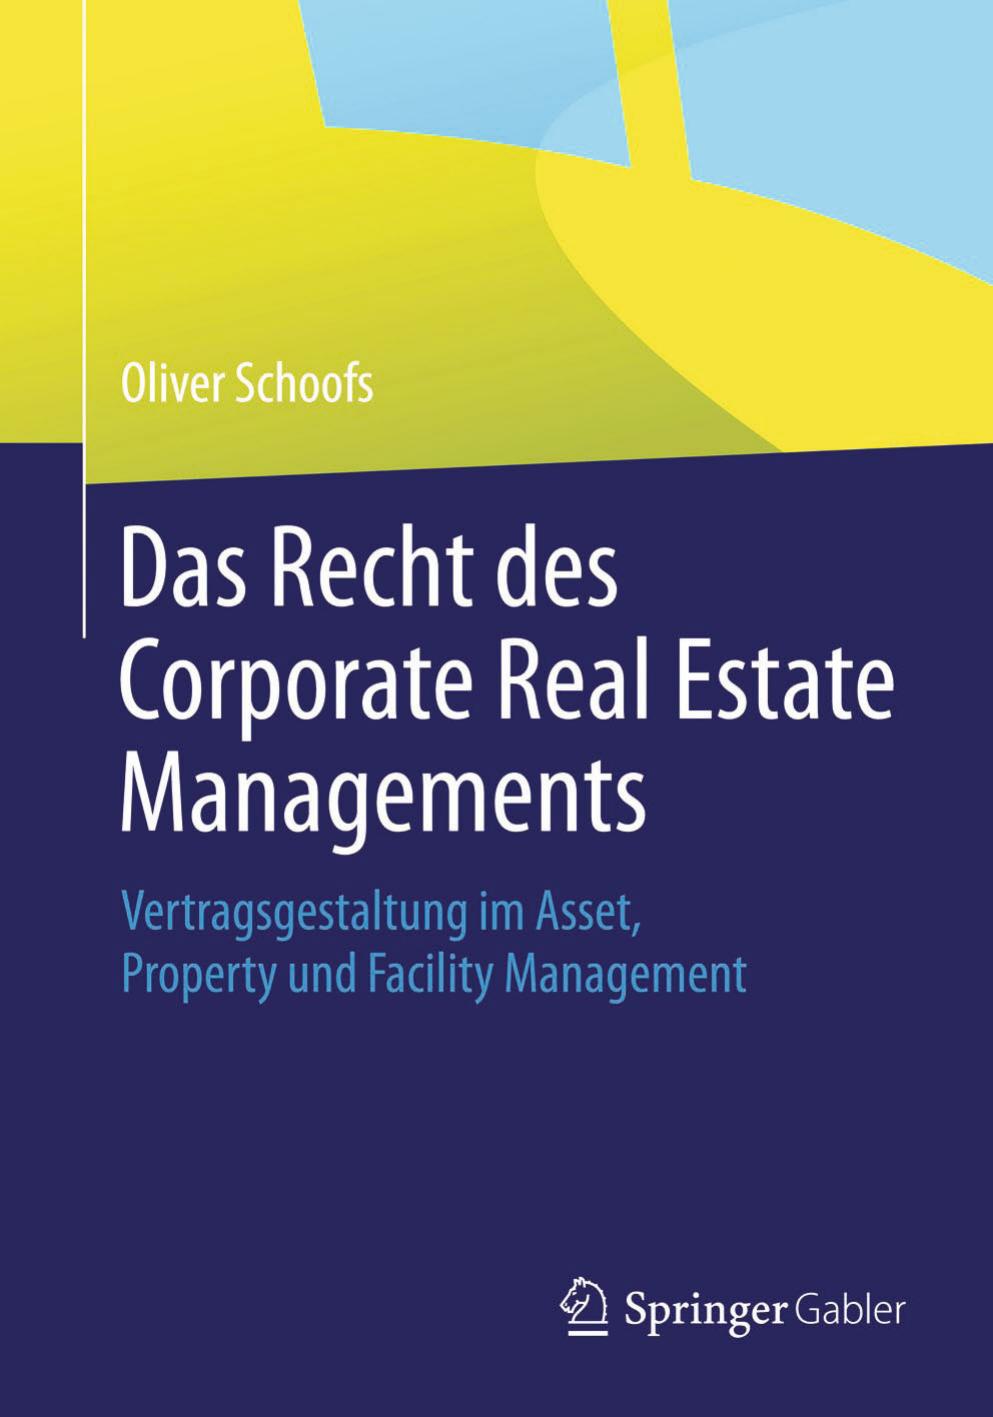 Das Recht des Corporate Real Estate Managements  Vertragsgestaltung im Asset, Property und Facility Management, (2015)